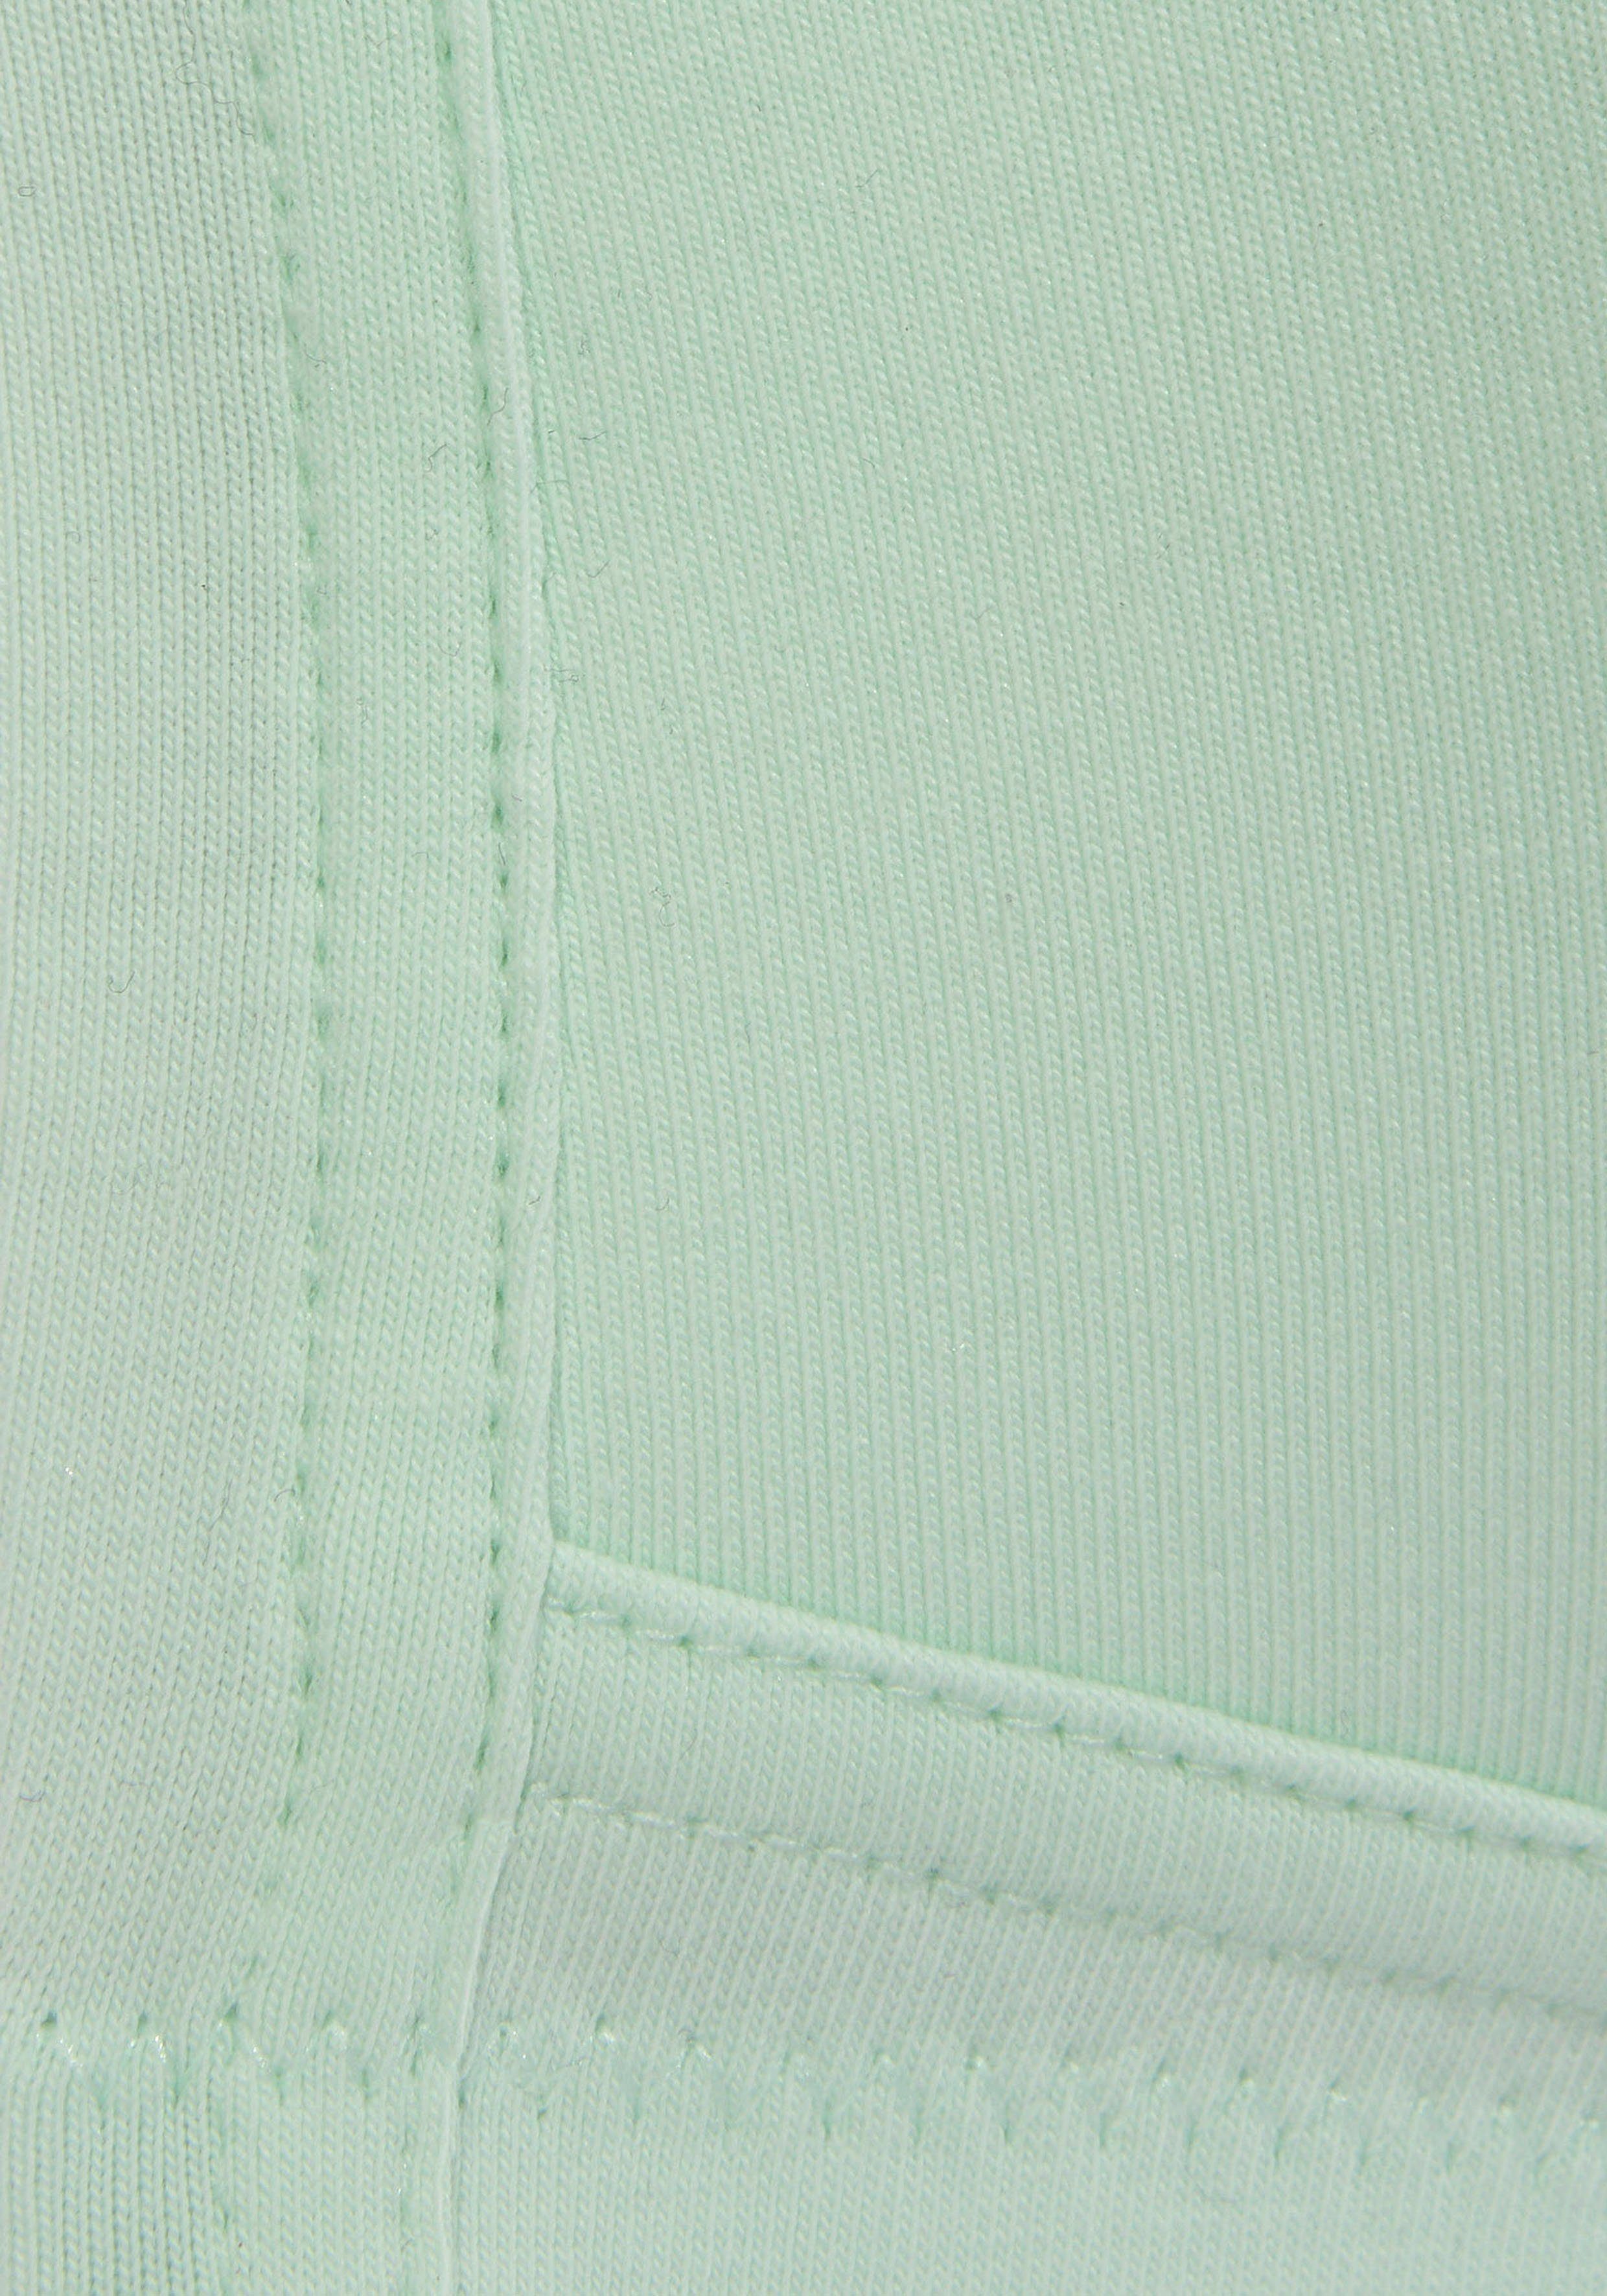 Stück) Basic petite aus Dessous mint+weiß fleur Baumwolle, T-Shirt-BH Bügel (Packung, 2 ohne